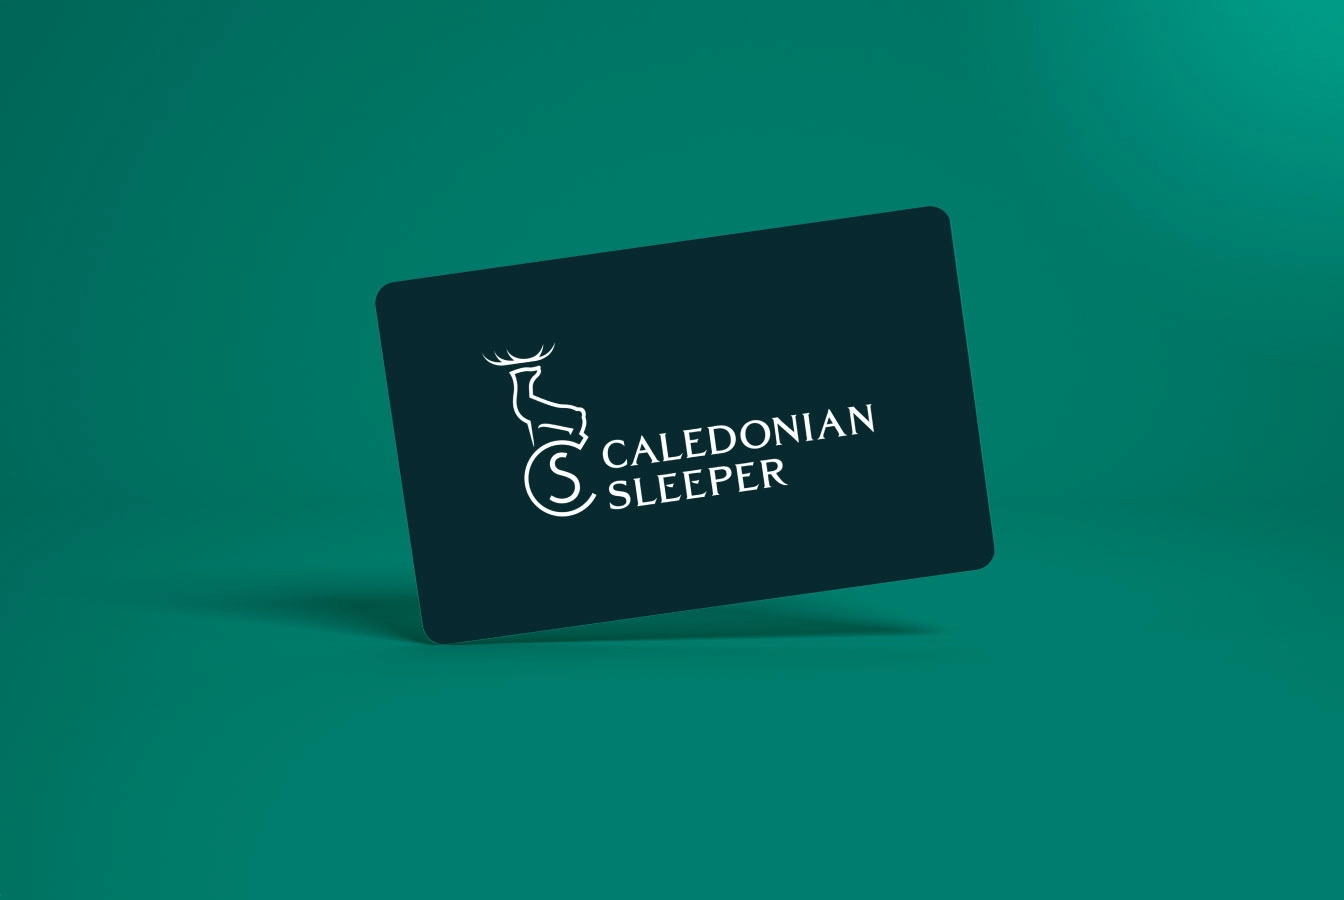 Smartcard illustrating Caledonian Sleeper room key